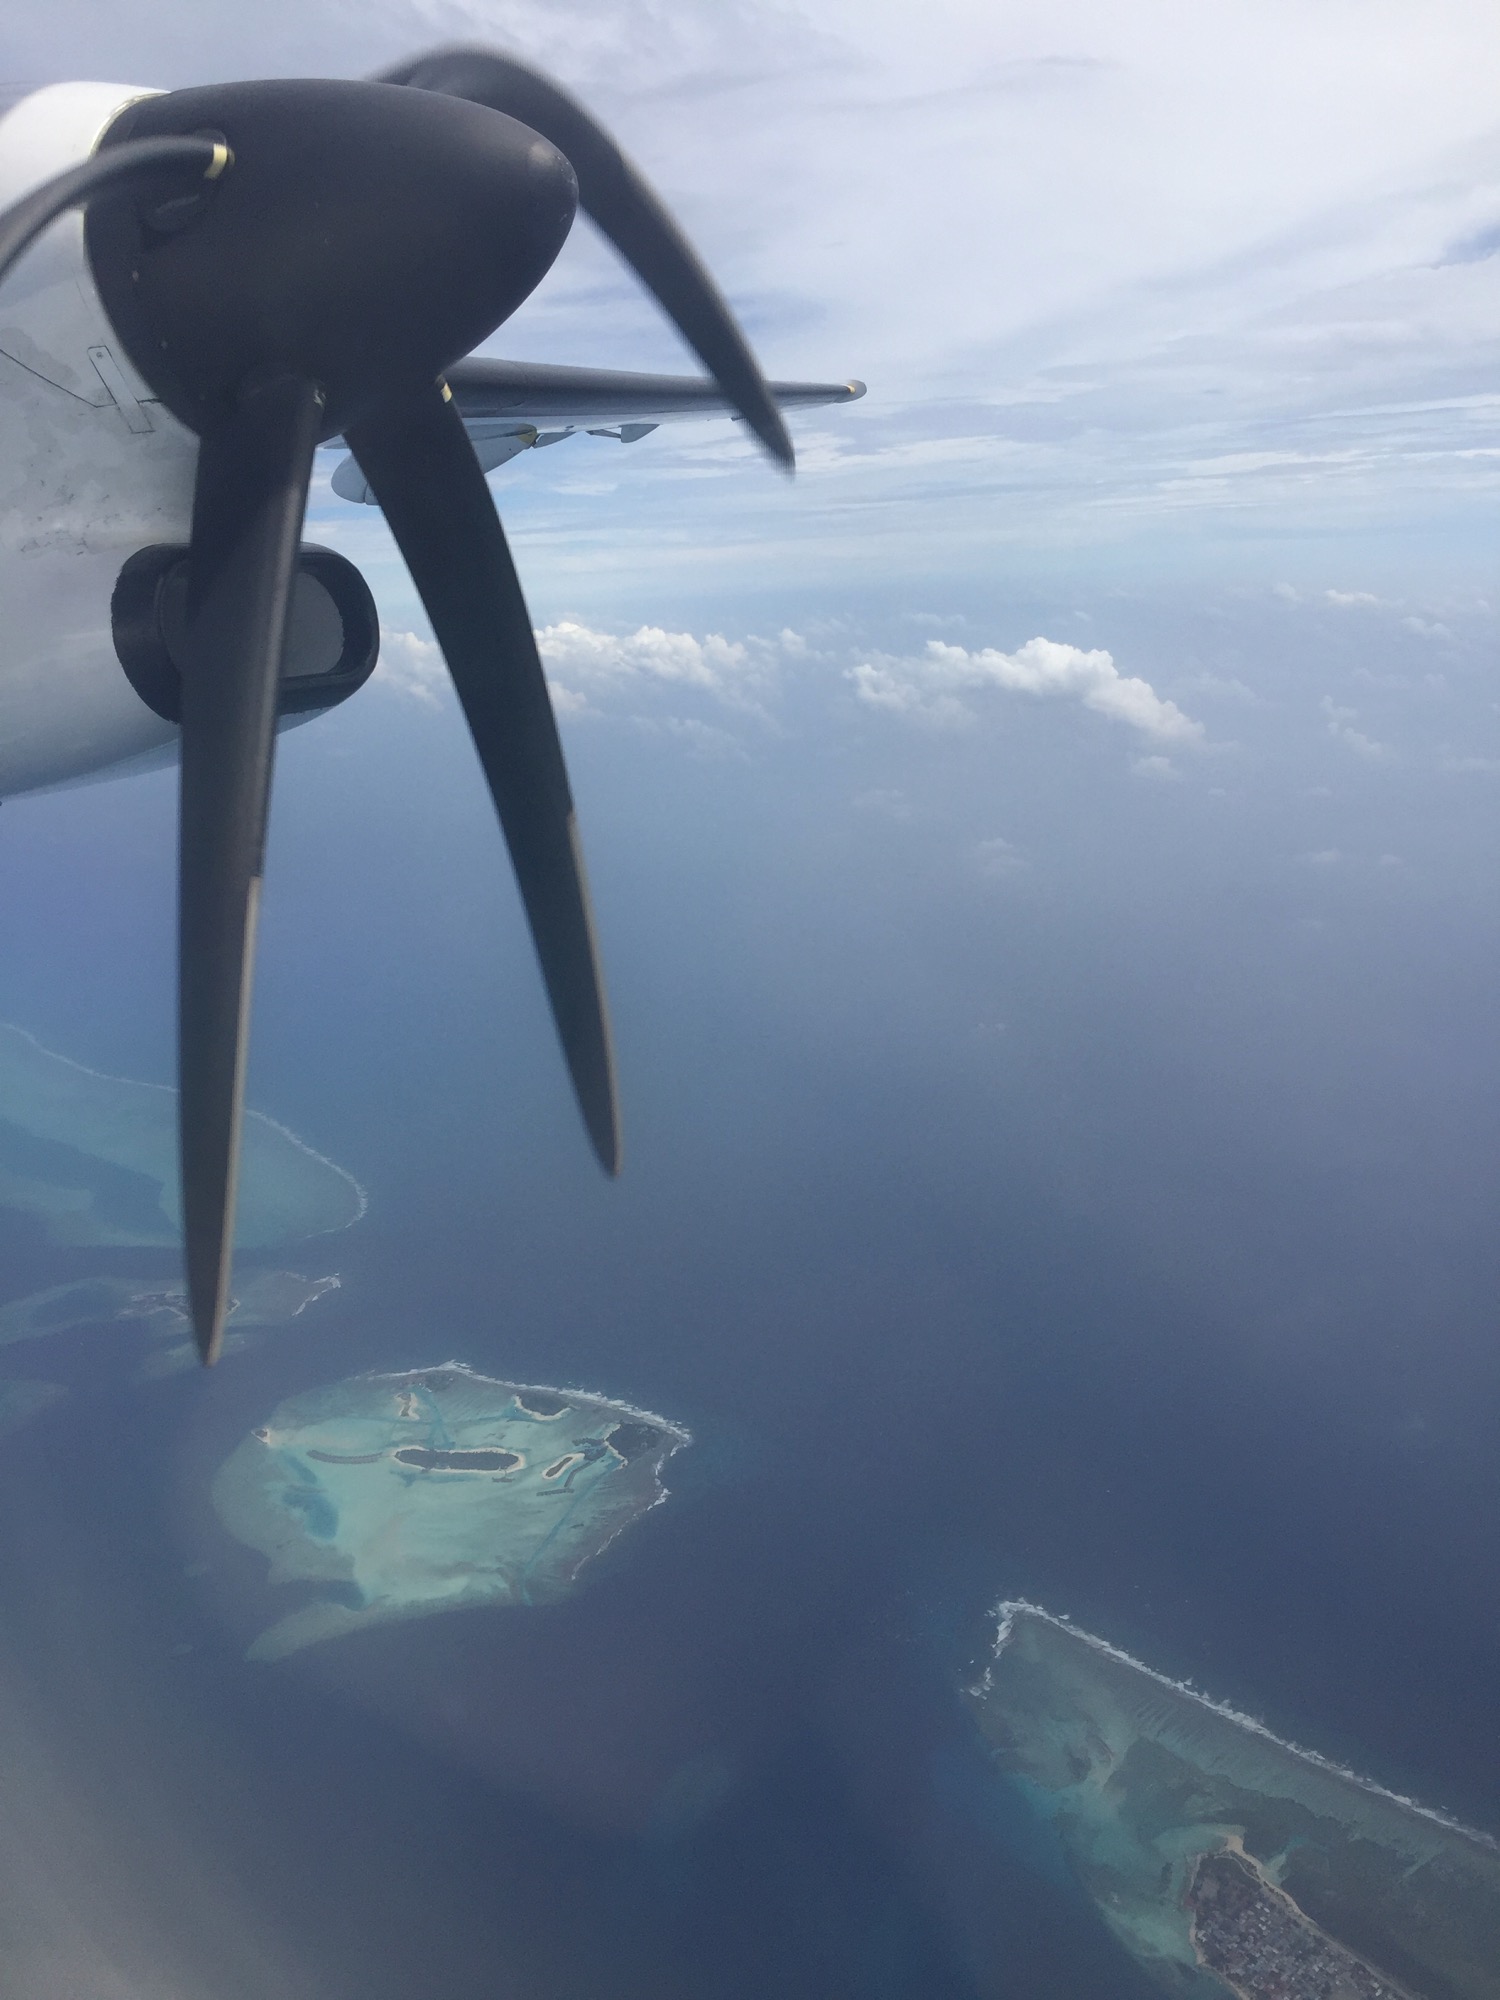 an airplane propeller above the ocean